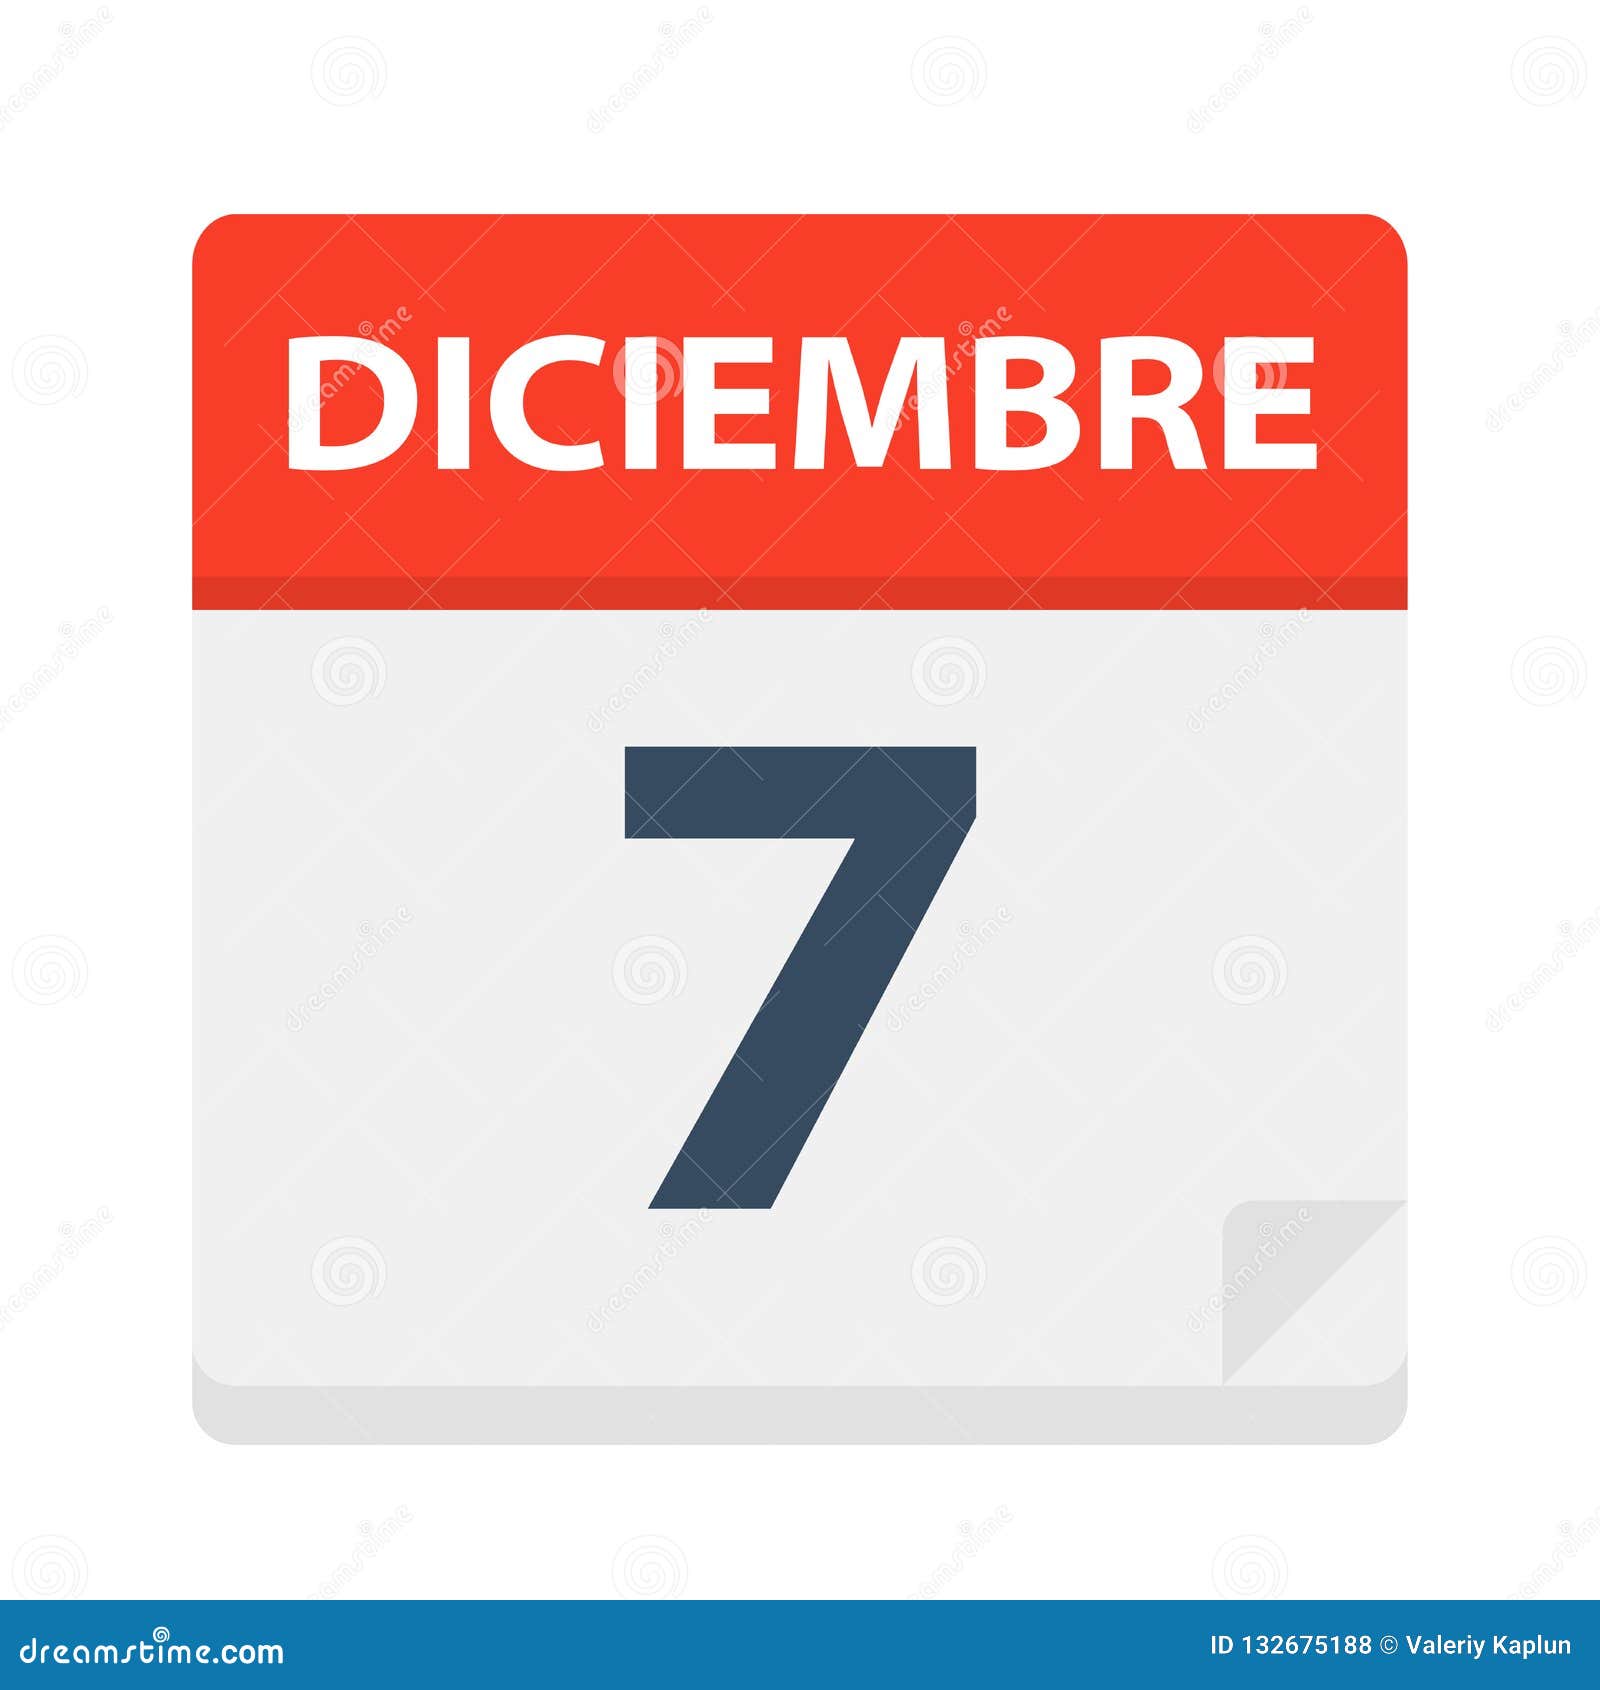 diciembre 7 - calendar icon - december 7.   of spanish calendar leaf